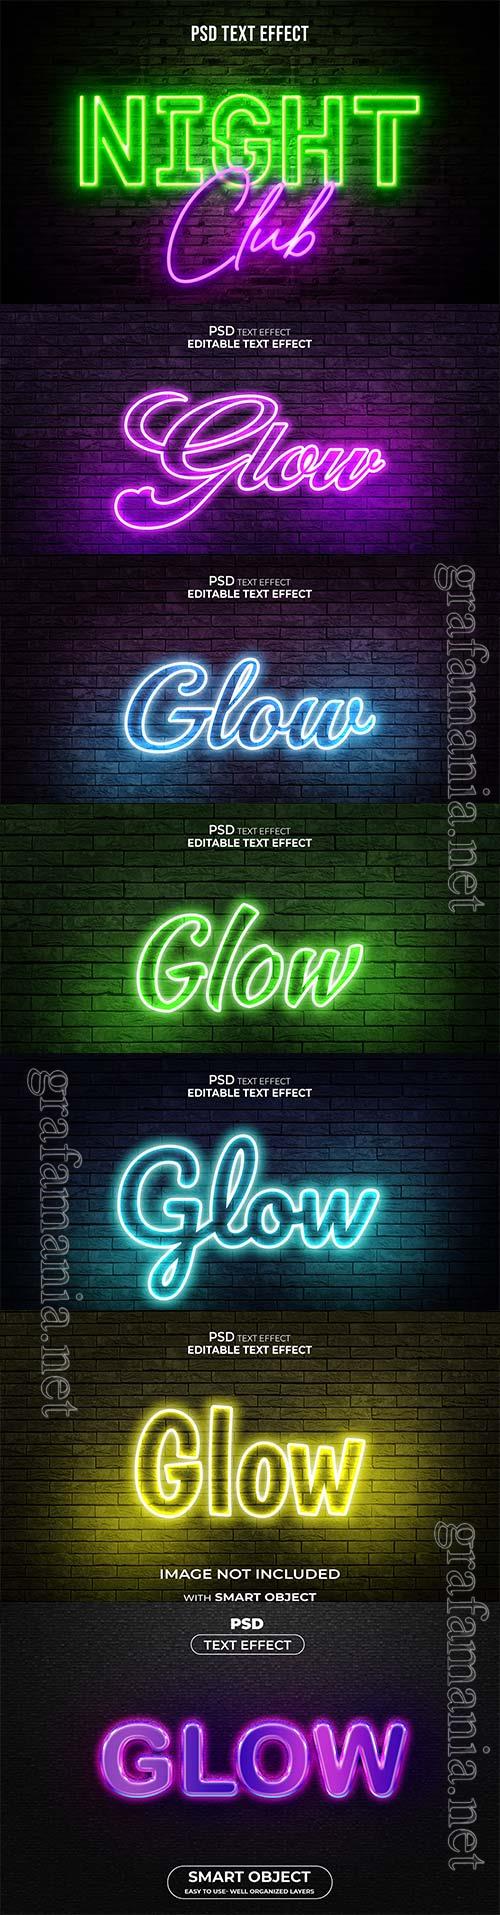 Glow text effect premium psd